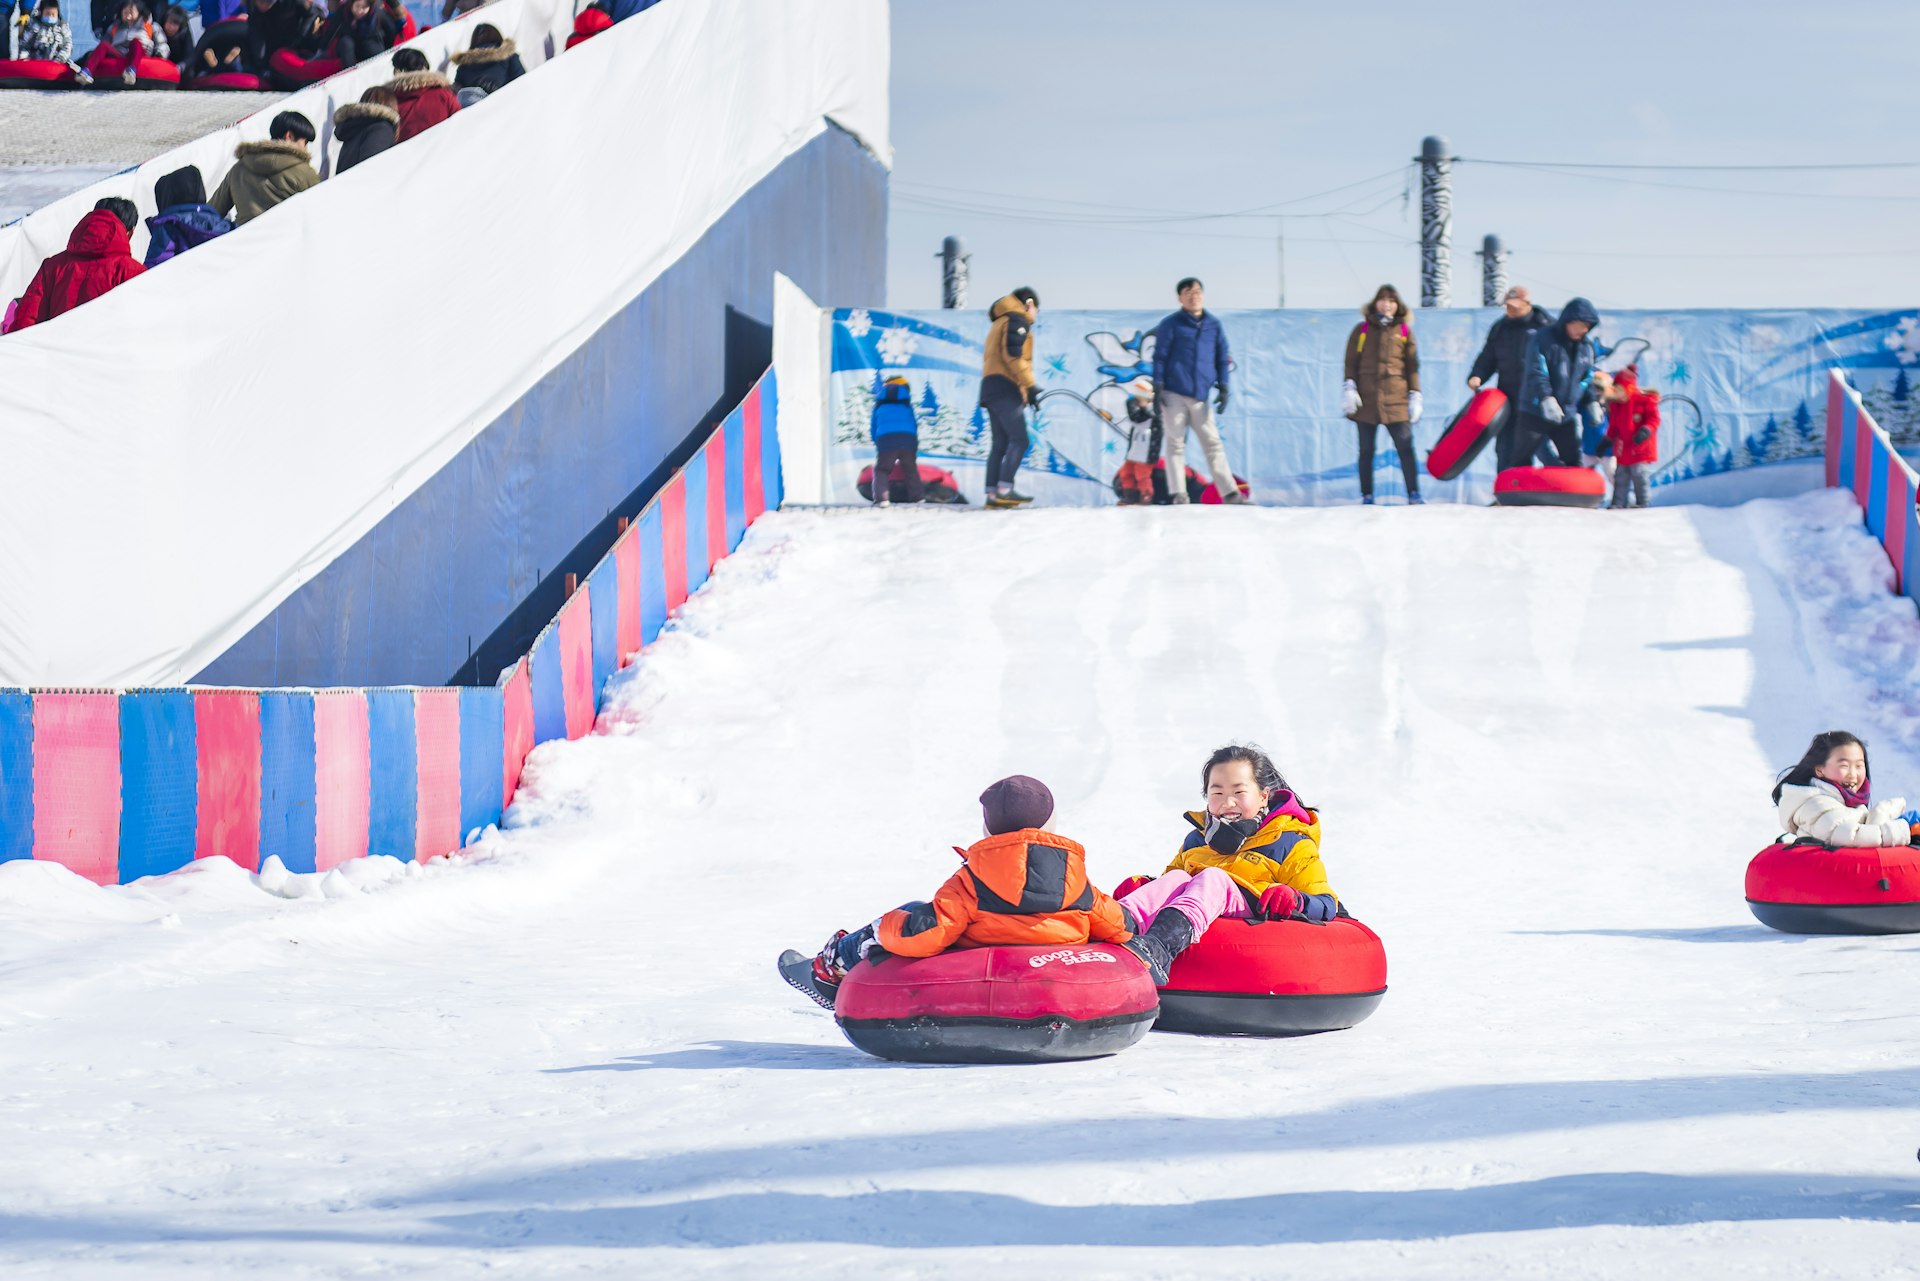 Children coast down snow-covered lanes in inner tubes in Seoul, South Korea